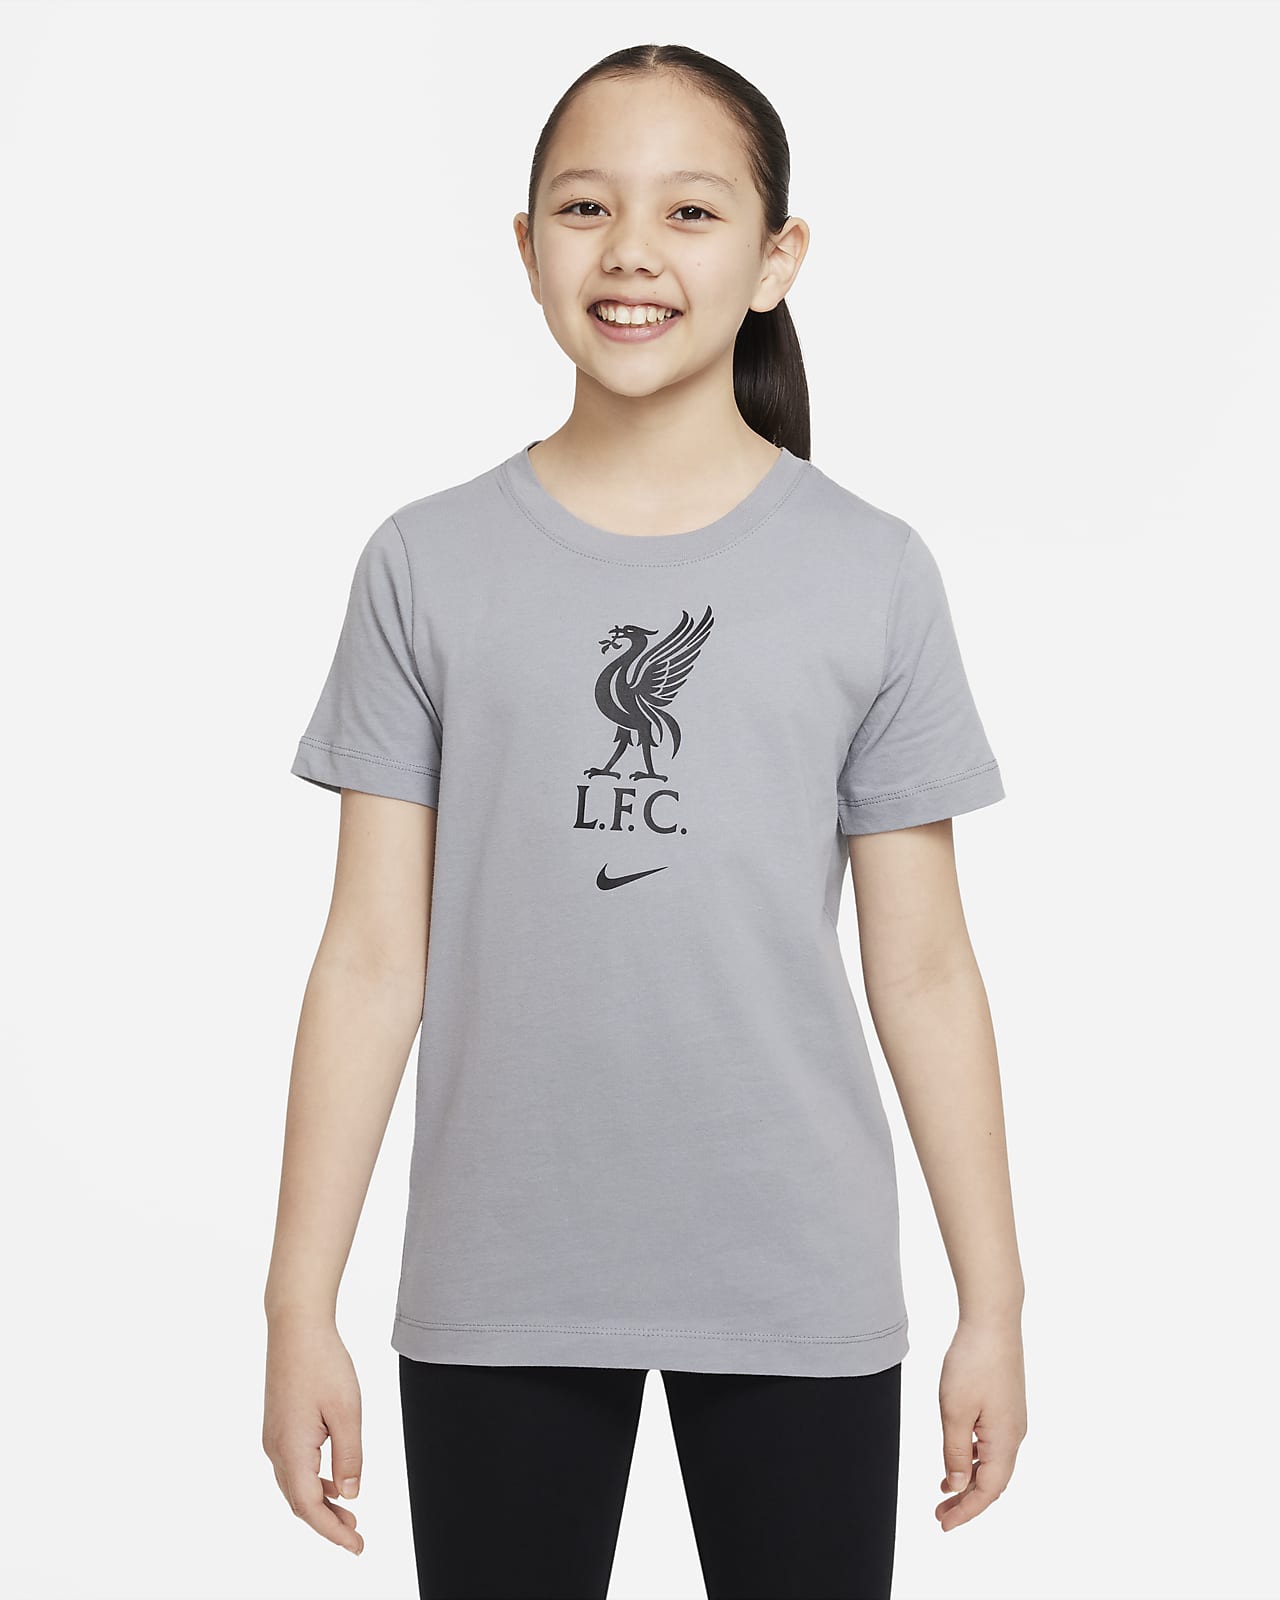 Liverpool F.C. Older Kids' T-Shirt